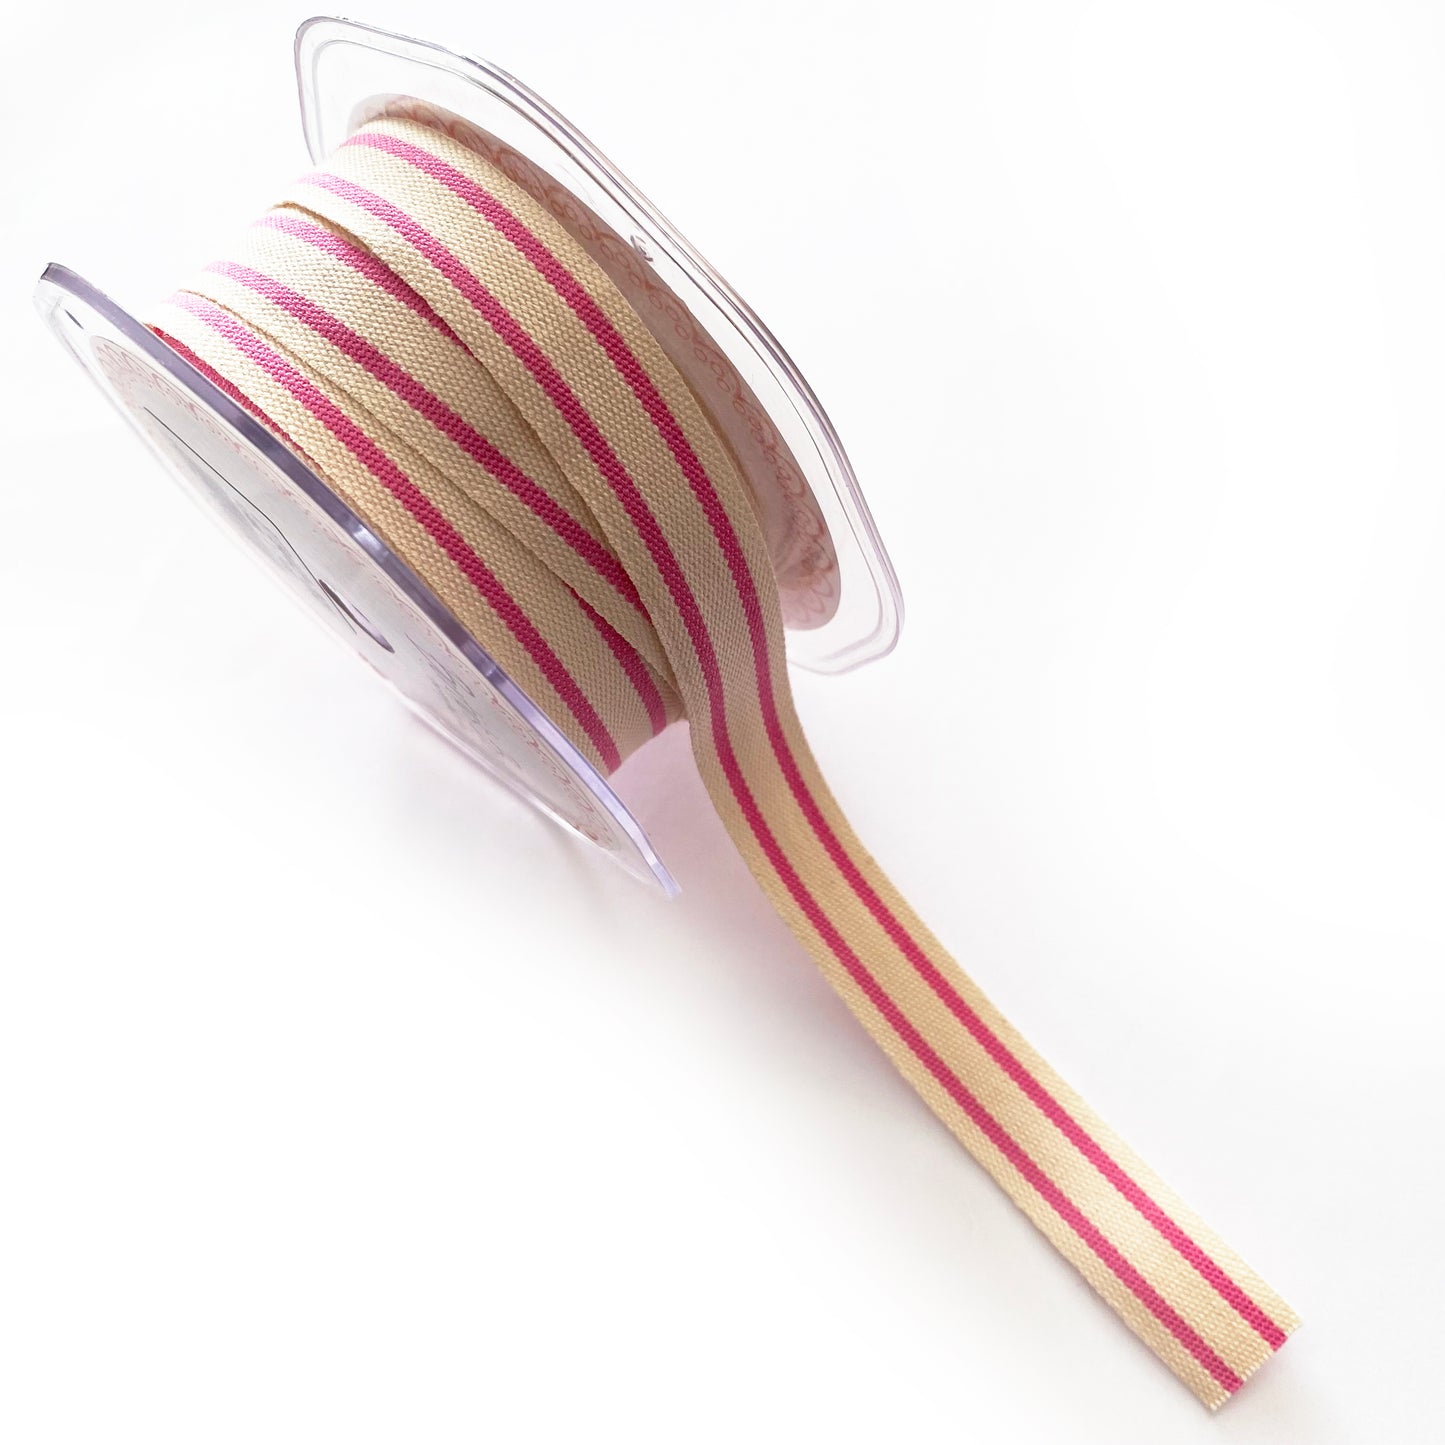 Pink & Cream Ribbon | Stripe Rustic Vintage Ticking Woven Cotton | 15mm 1.5cm - SweetpeaStore